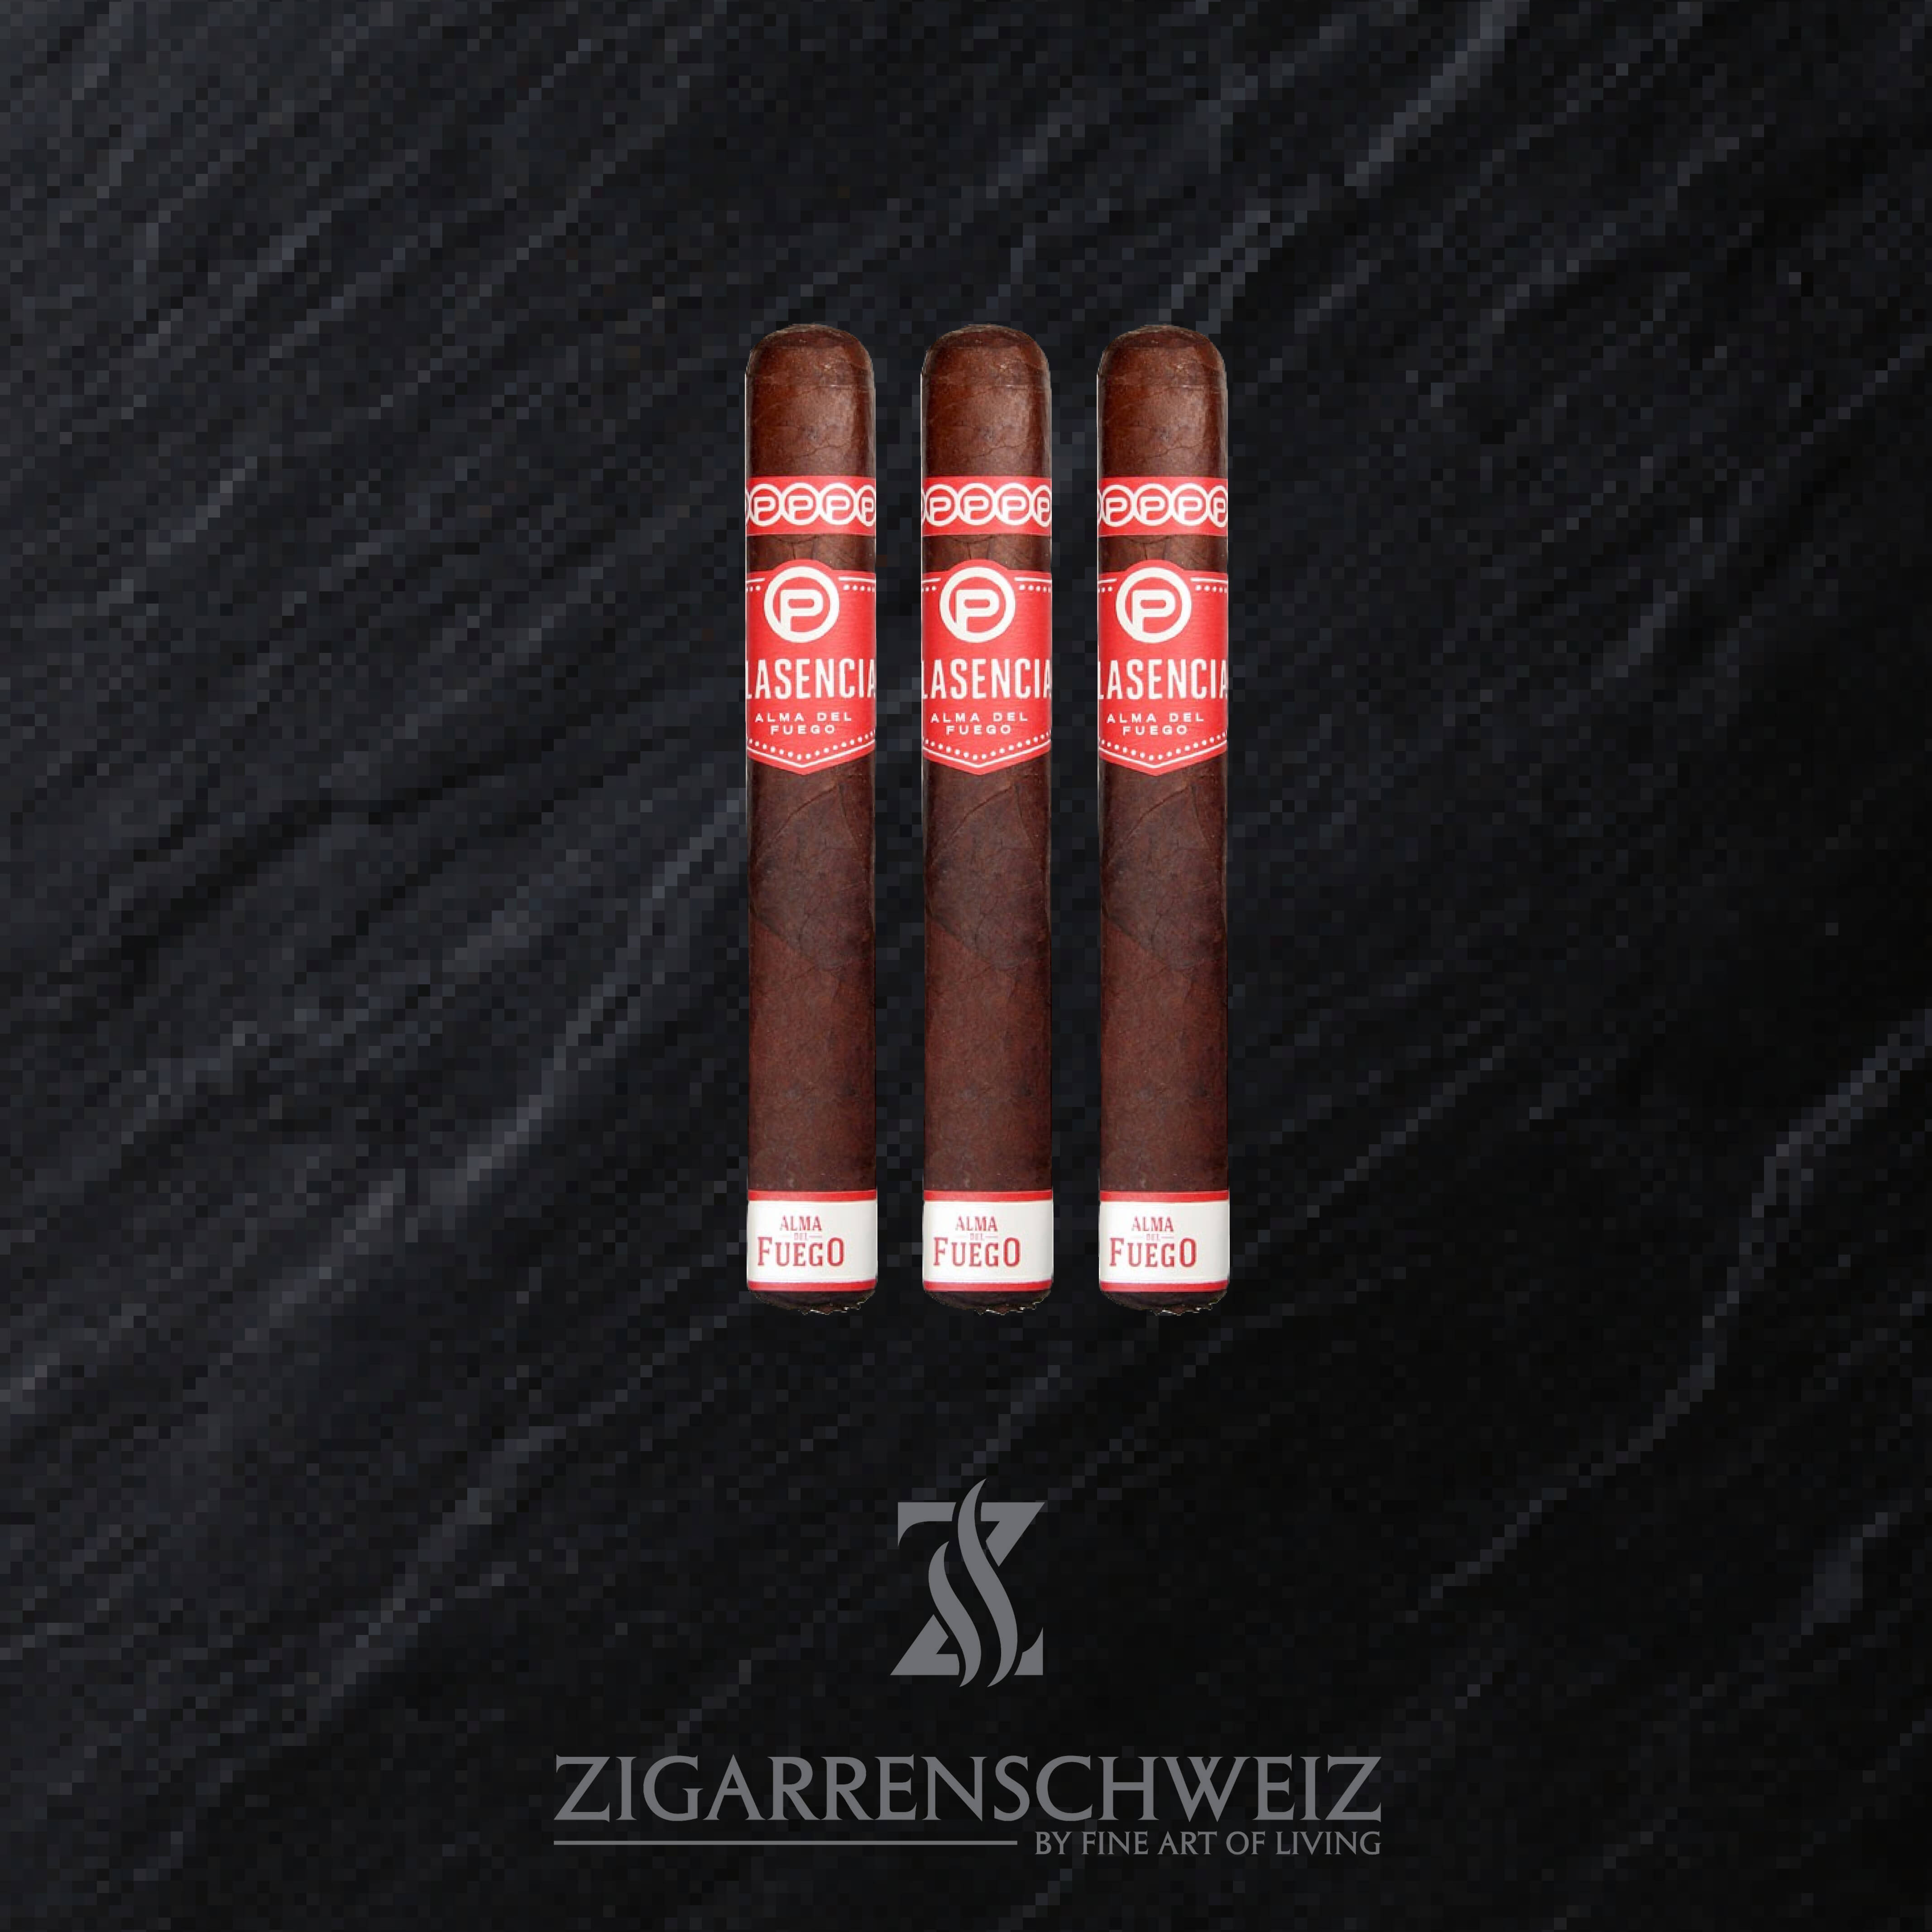 3er Etui Plasencia Alma del Fuego Concepcion Zigarren im Toro Format